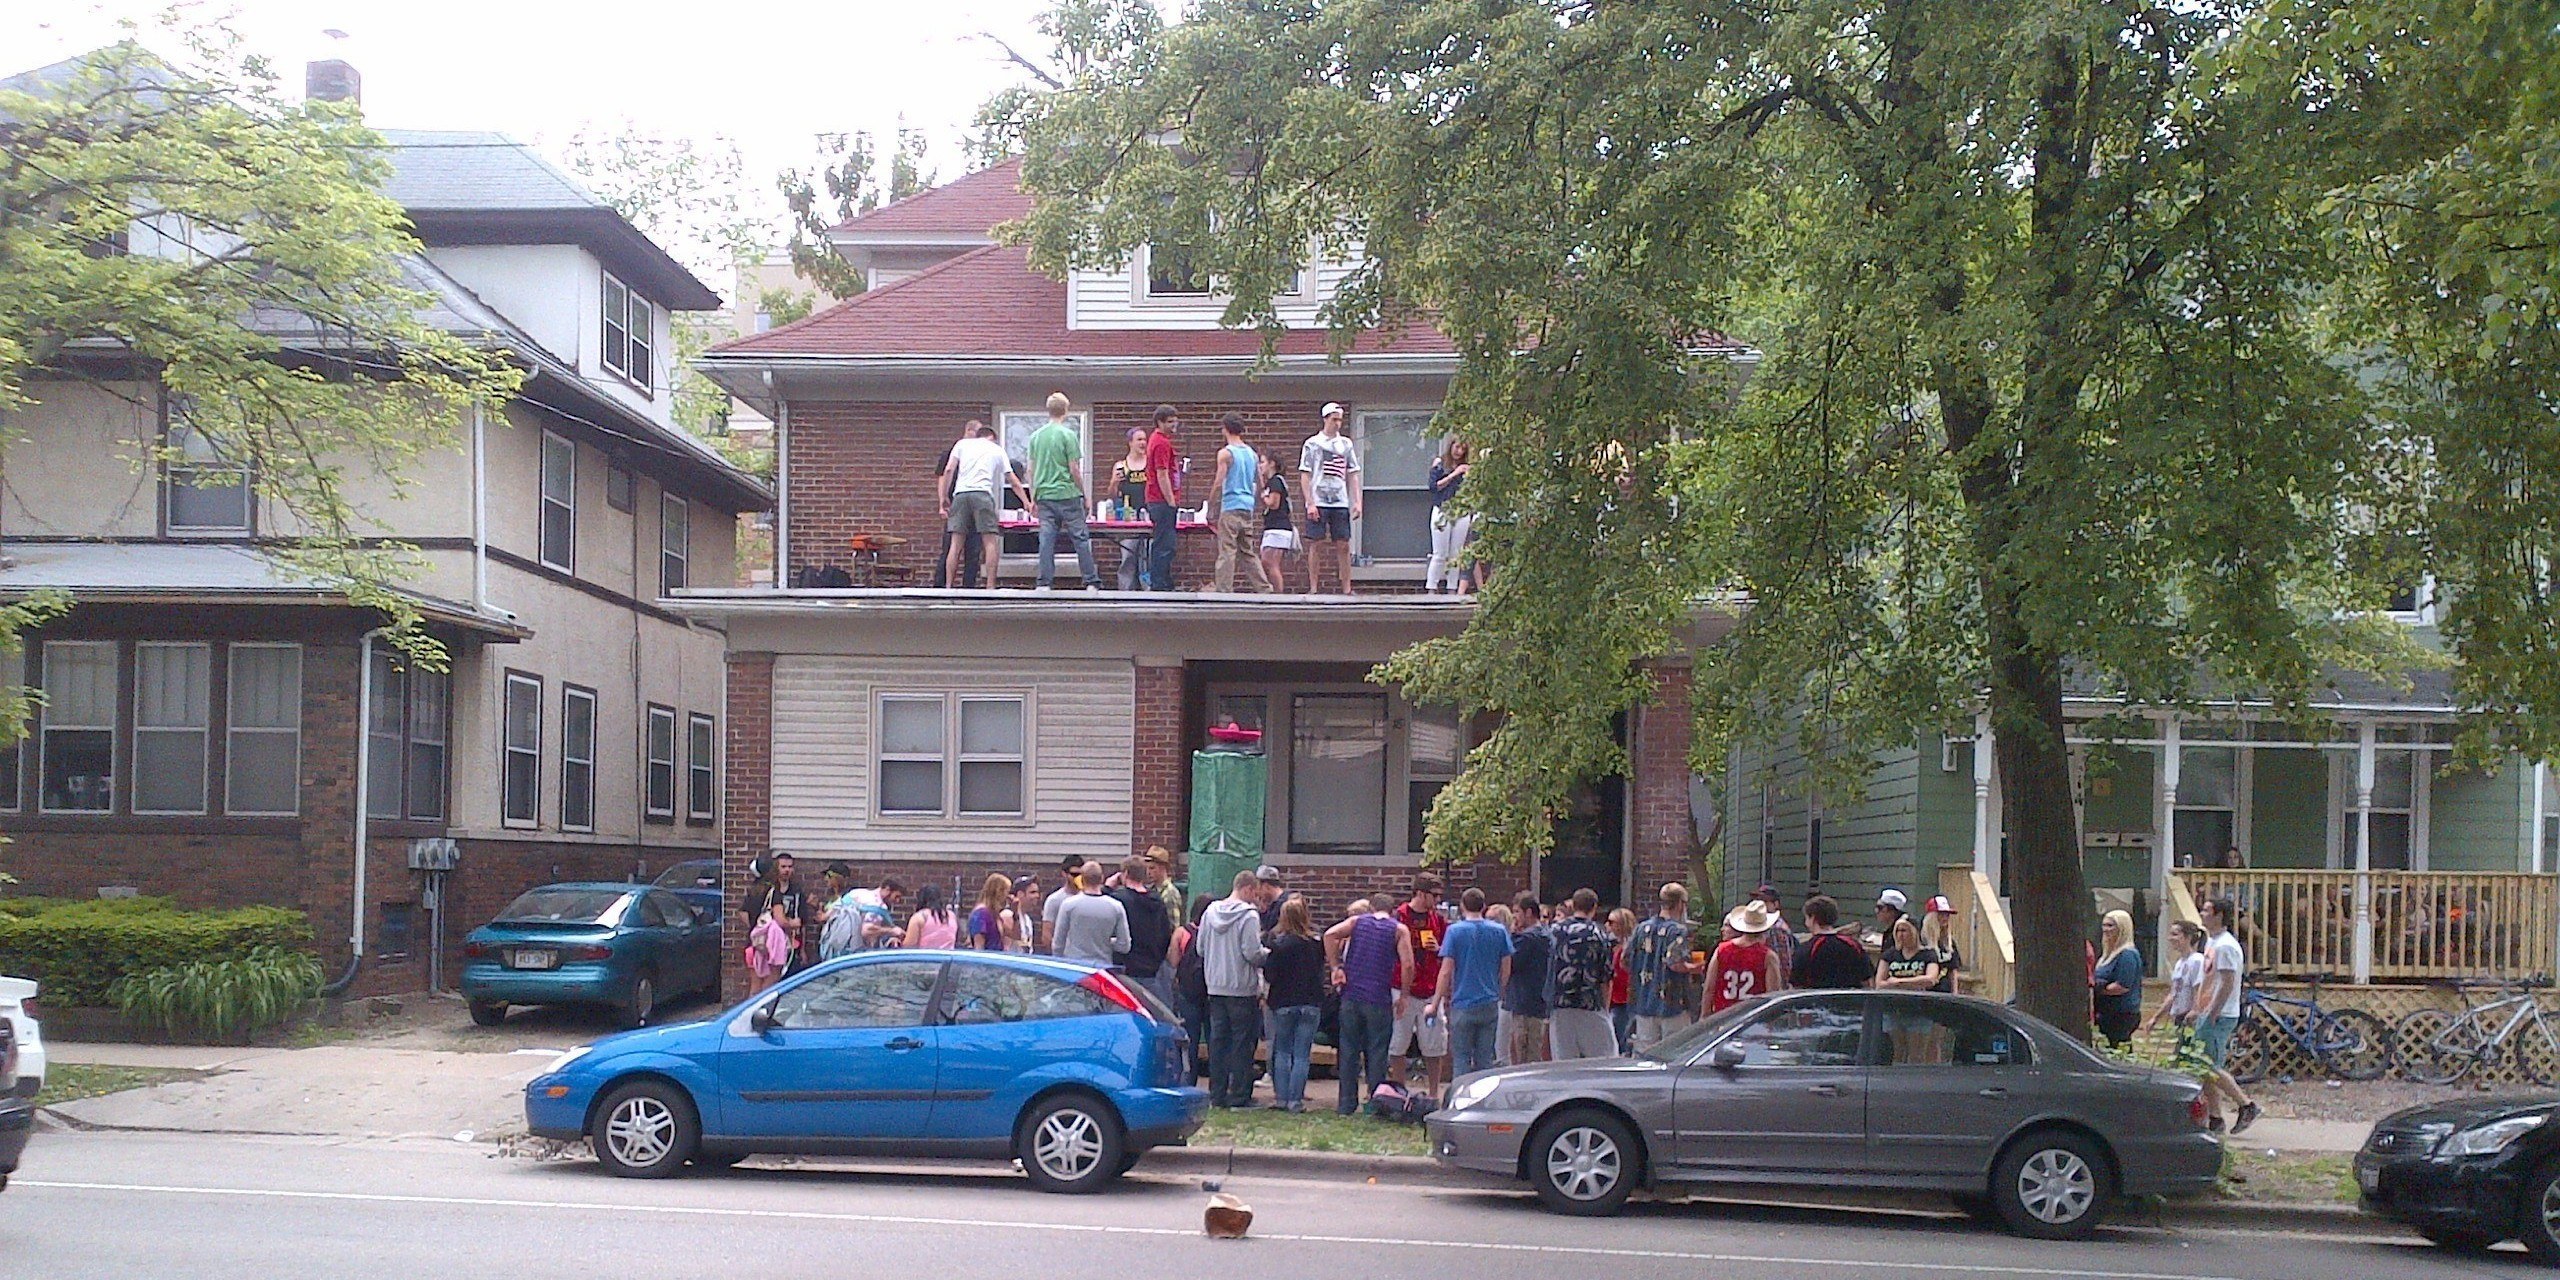 Suburban gathering at Mifflin Street Party in Madison, Wisconsin.